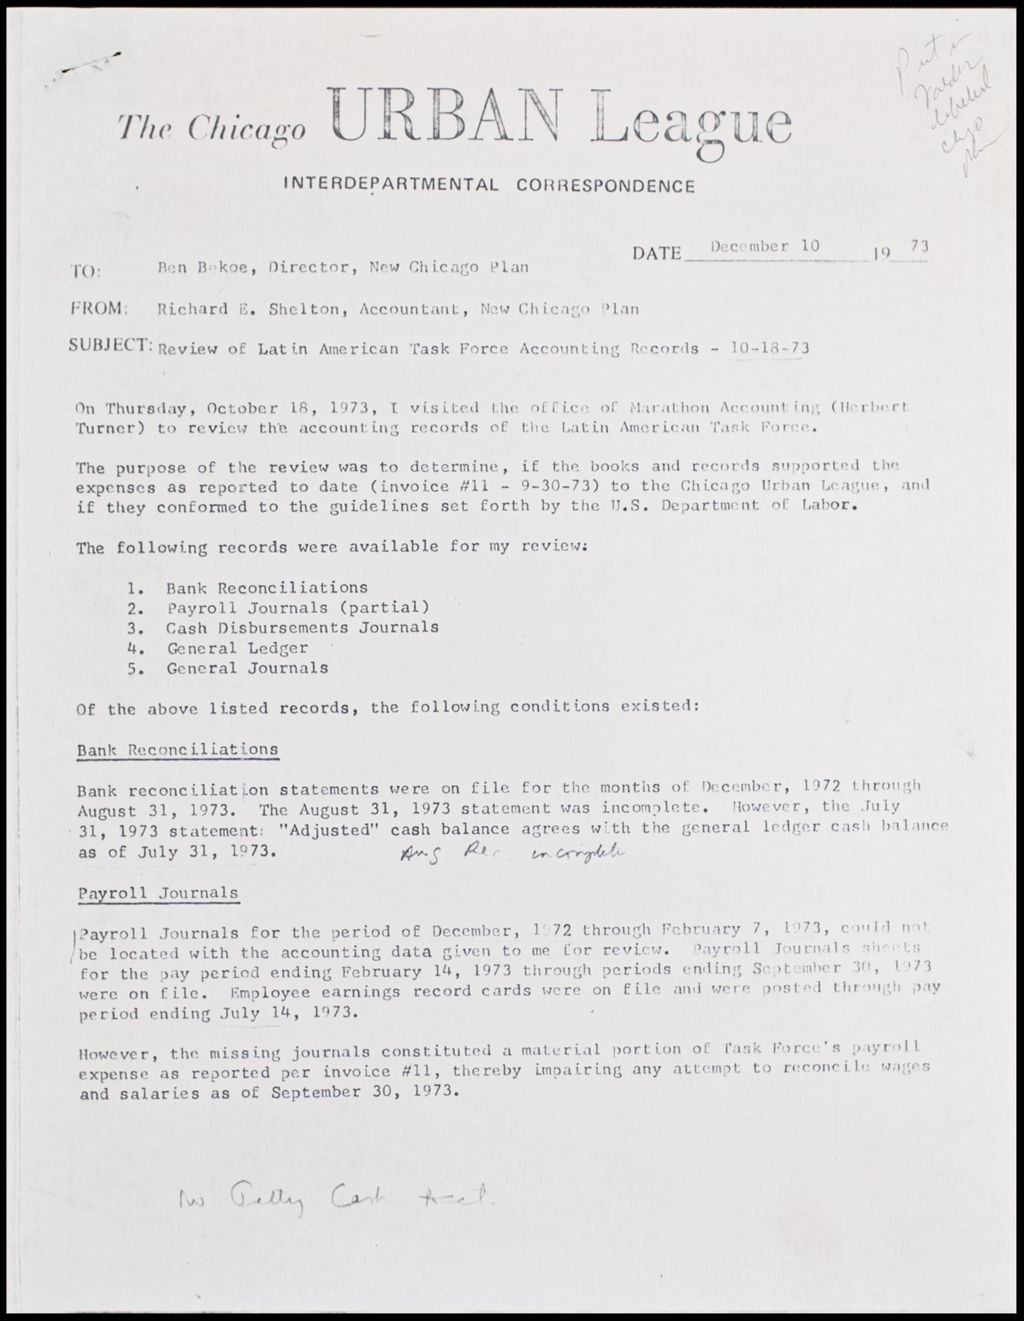 Miniature of Miscellaneous Information, 1973 (Folder II-994)